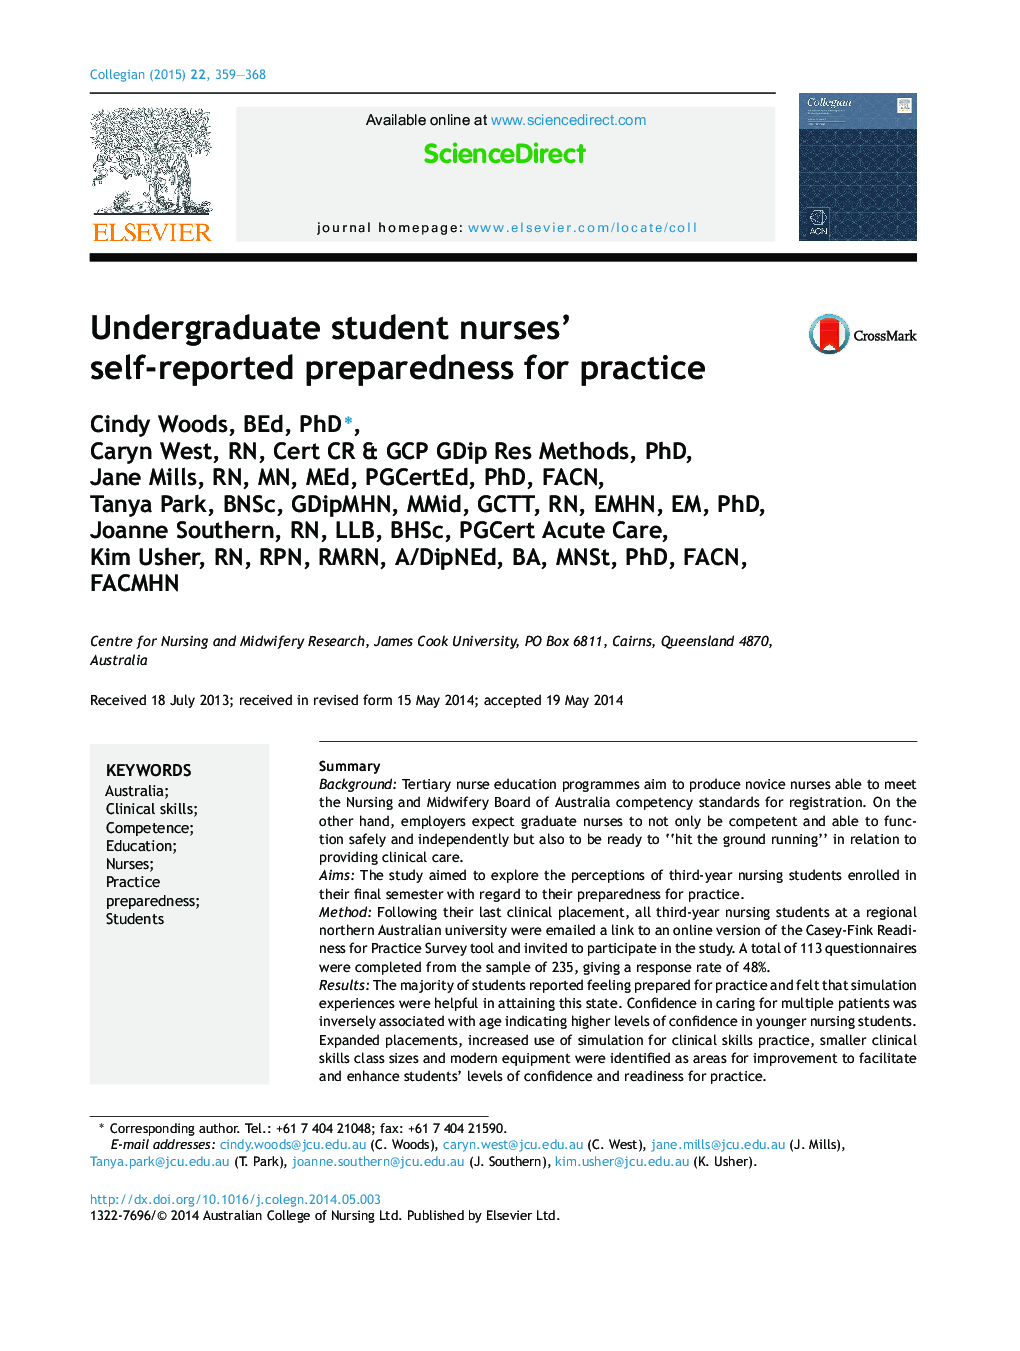 Undergraduate student nurses' self-reported preparedness for practice